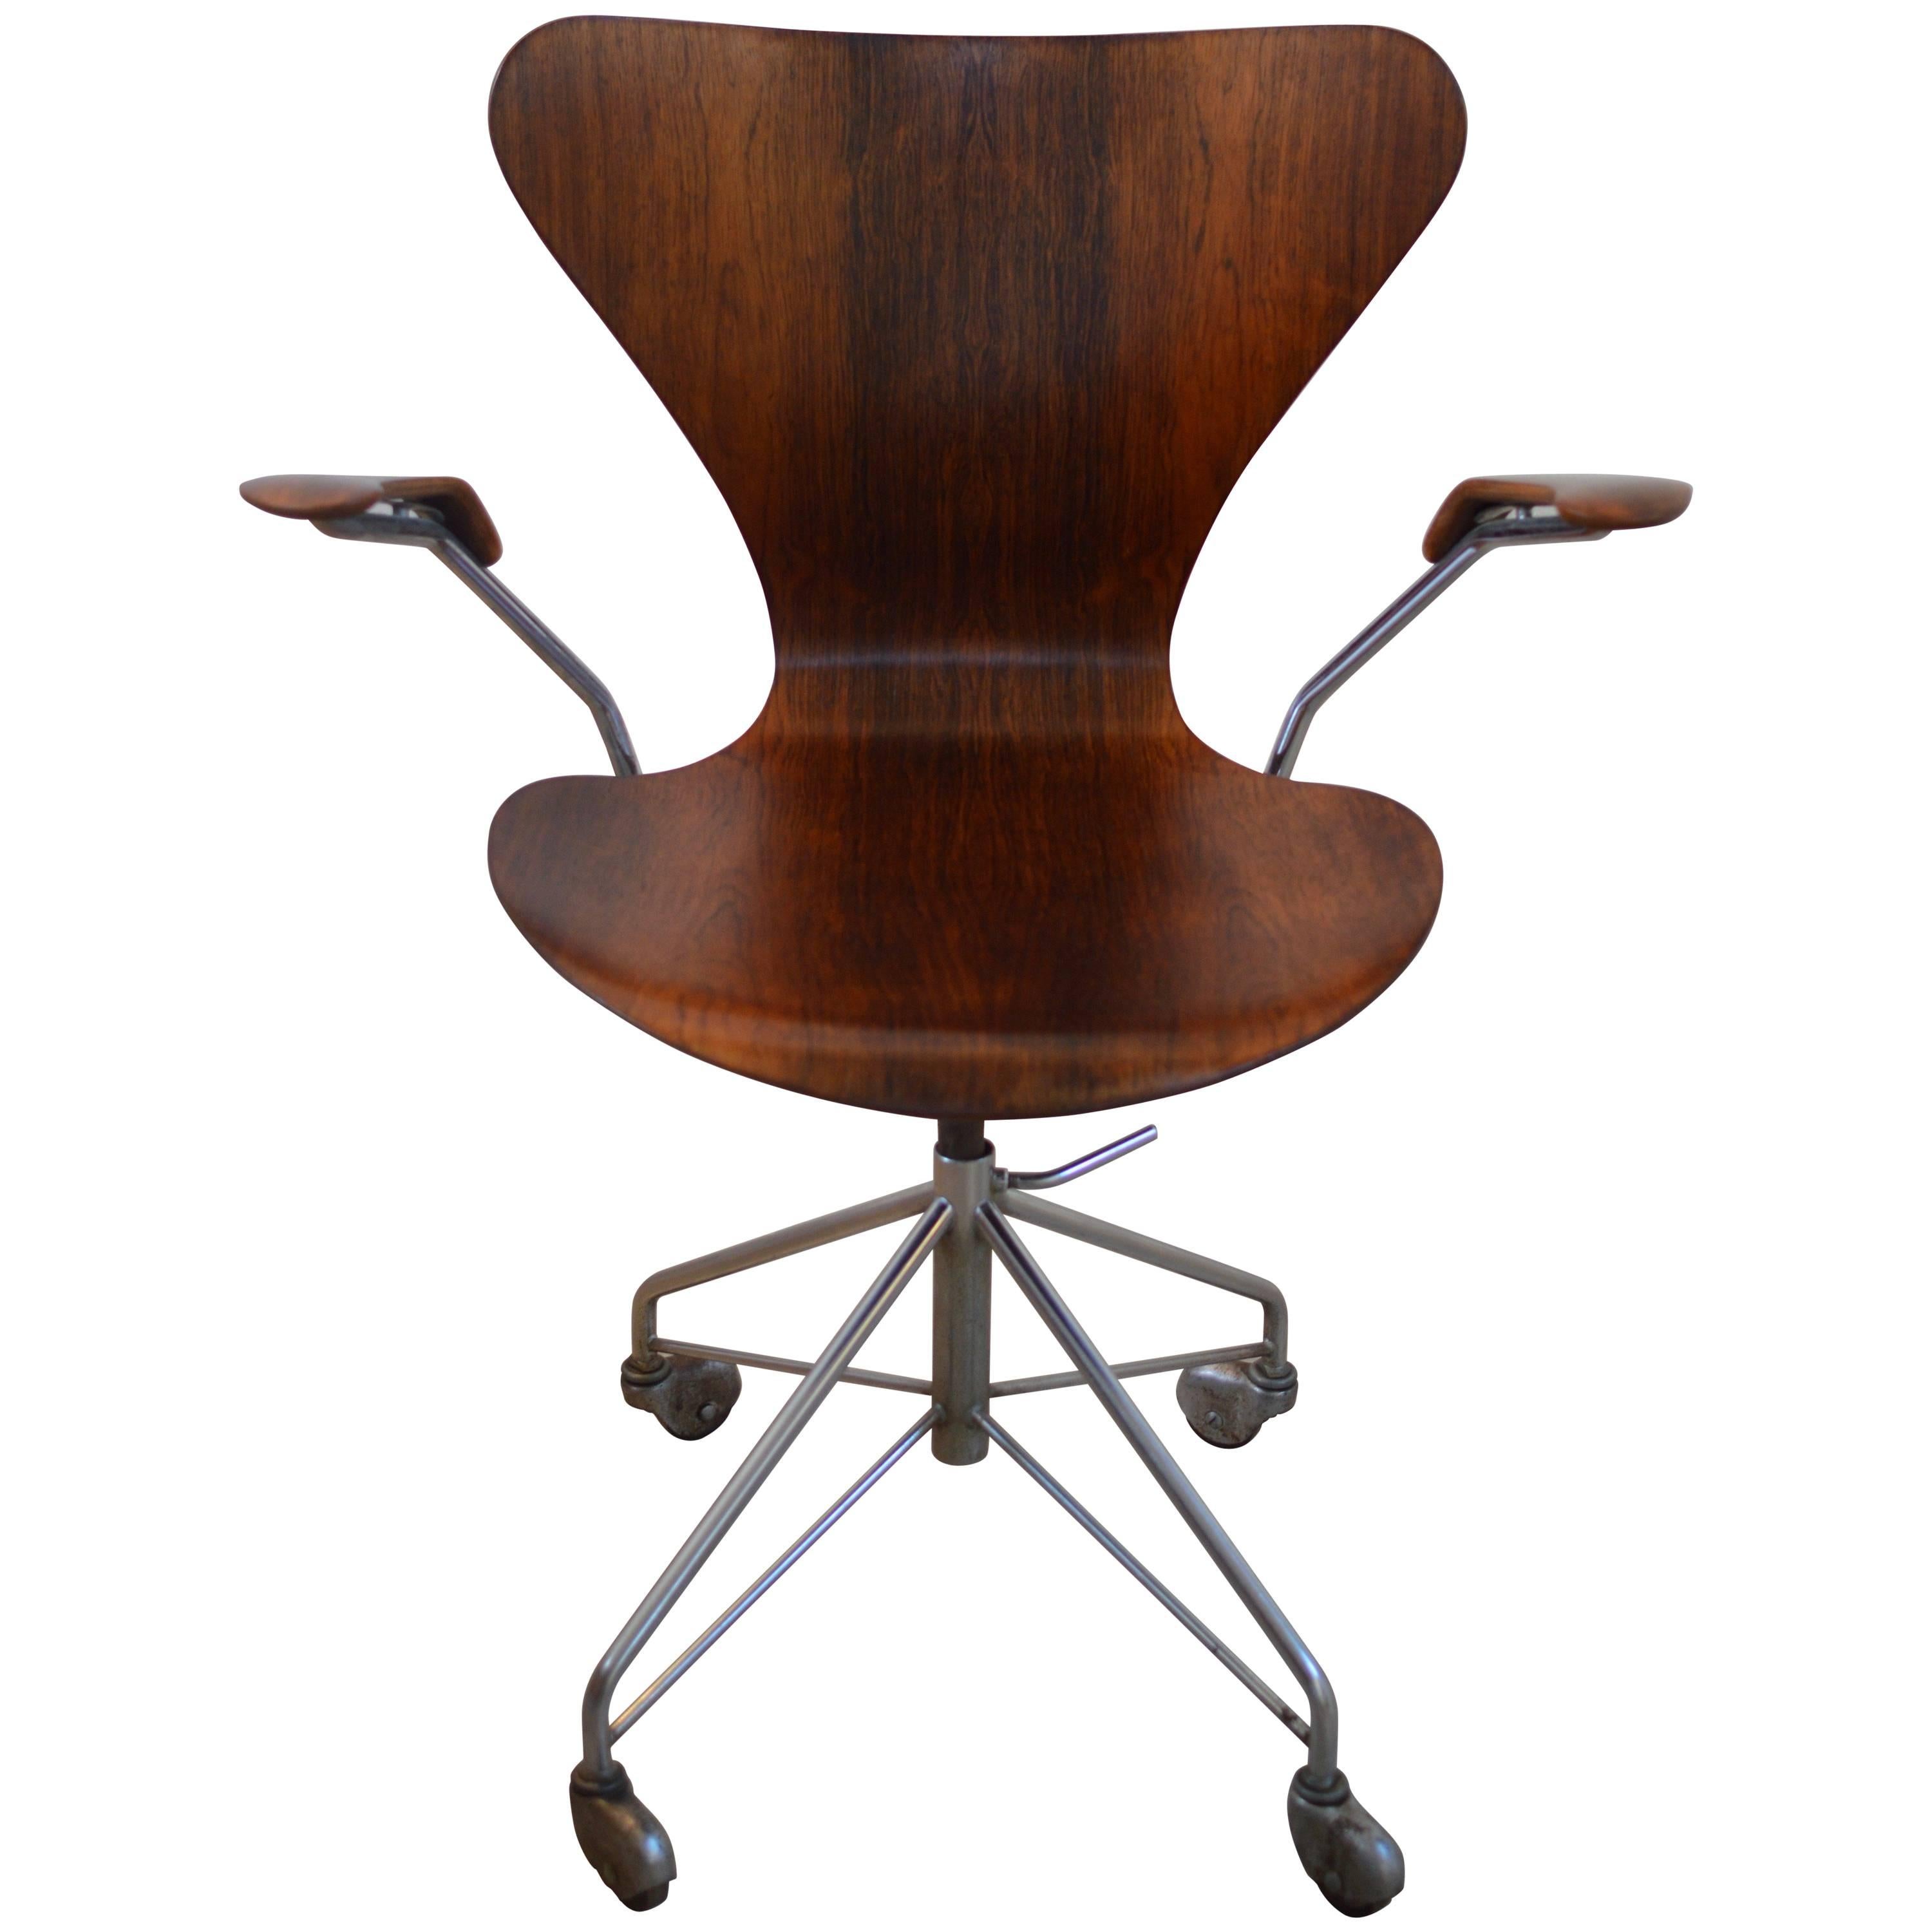 Rare Rosewood Earliest Edition Arne Jacobsen Swivel Desk Chair